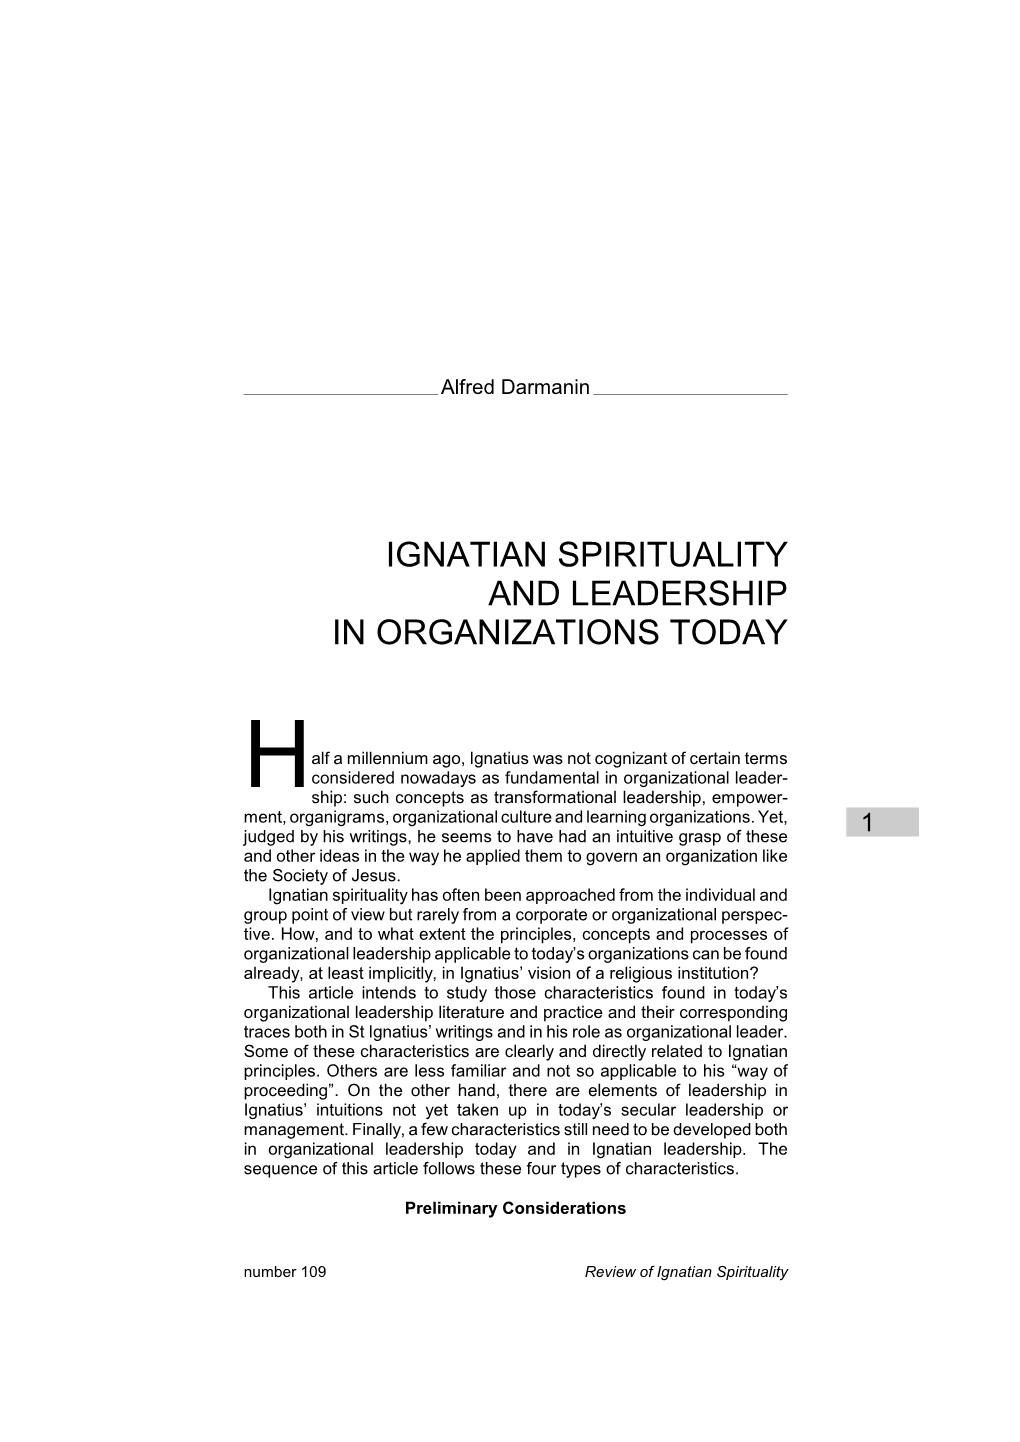 Ignatian Spirituality and Organizational Leadership Today